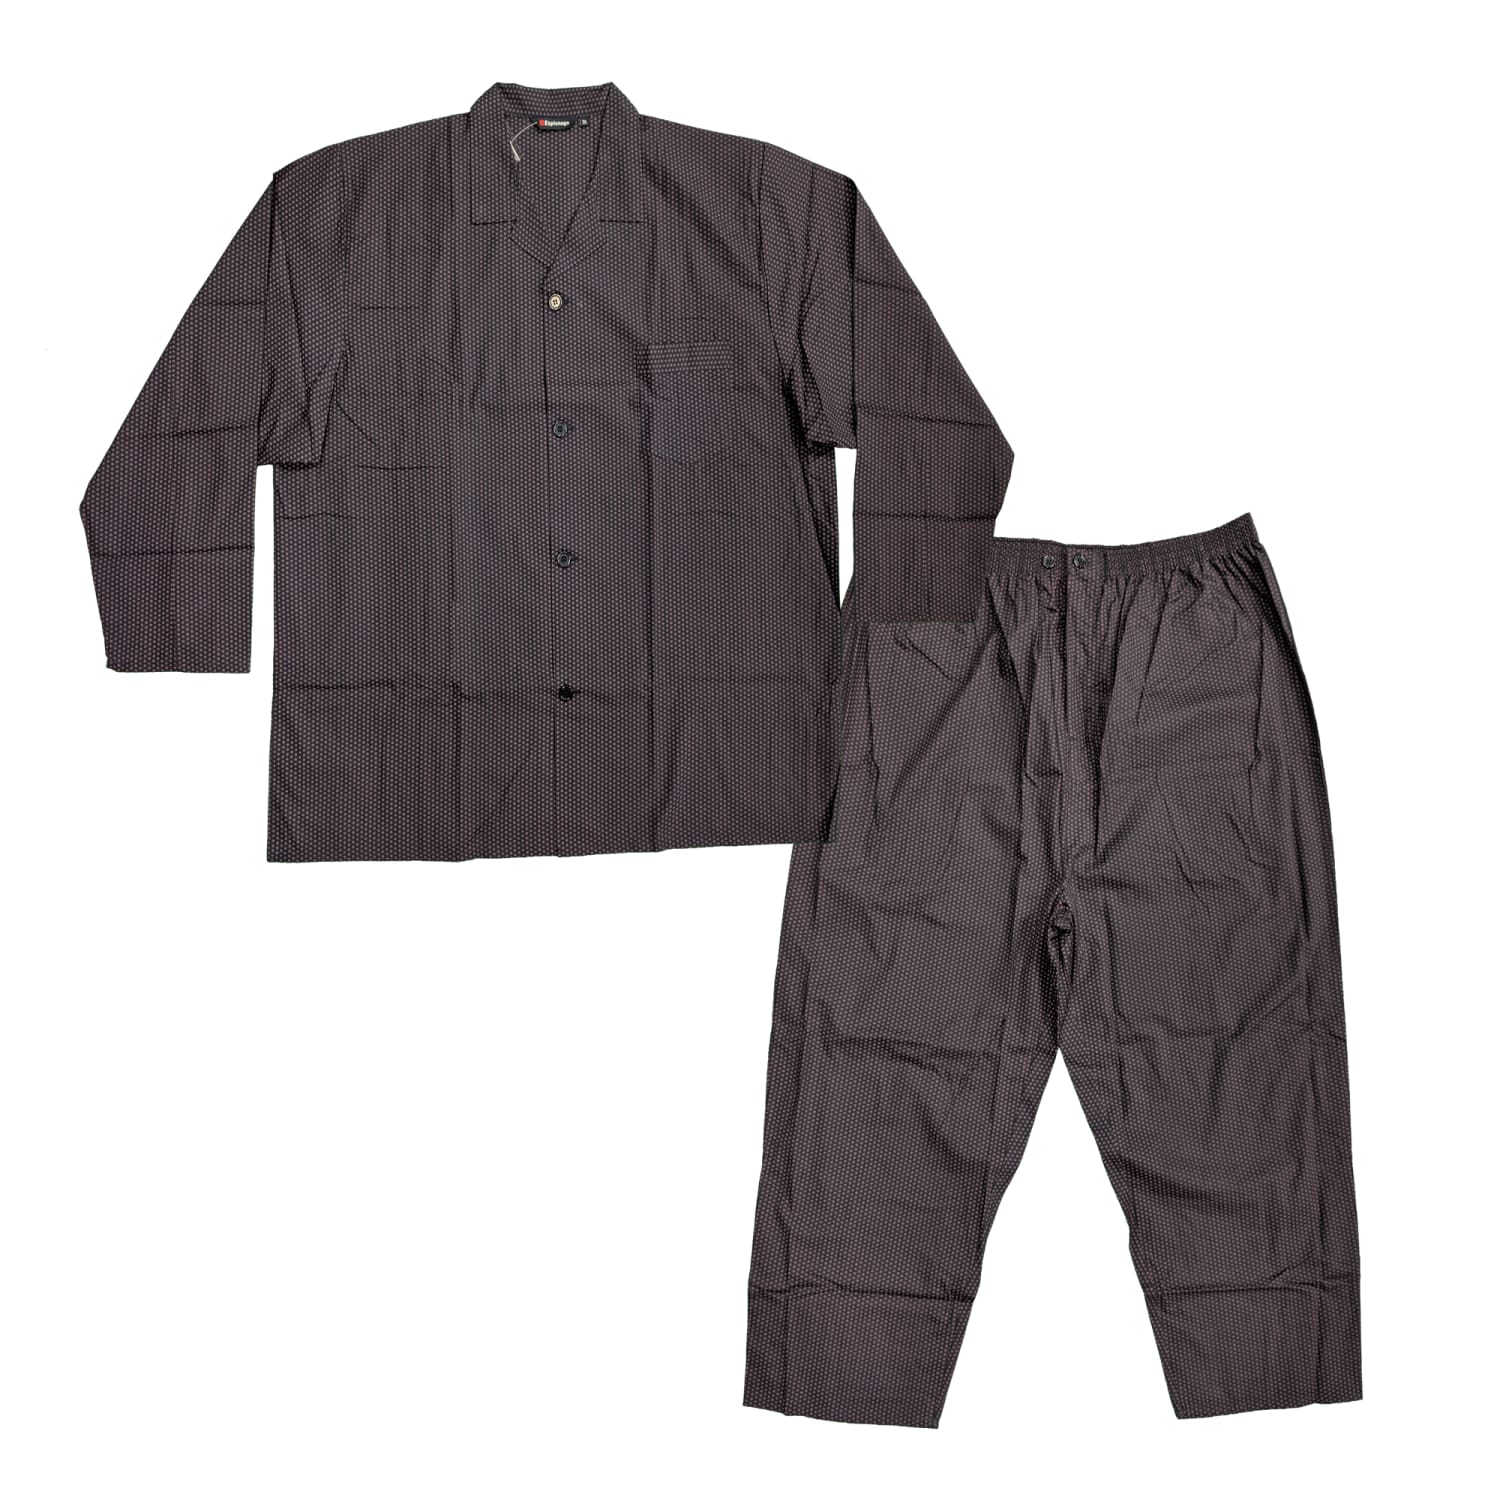 Espionage PJs (Shirt & Trousers) - PJ066 - Navy / Wine 1